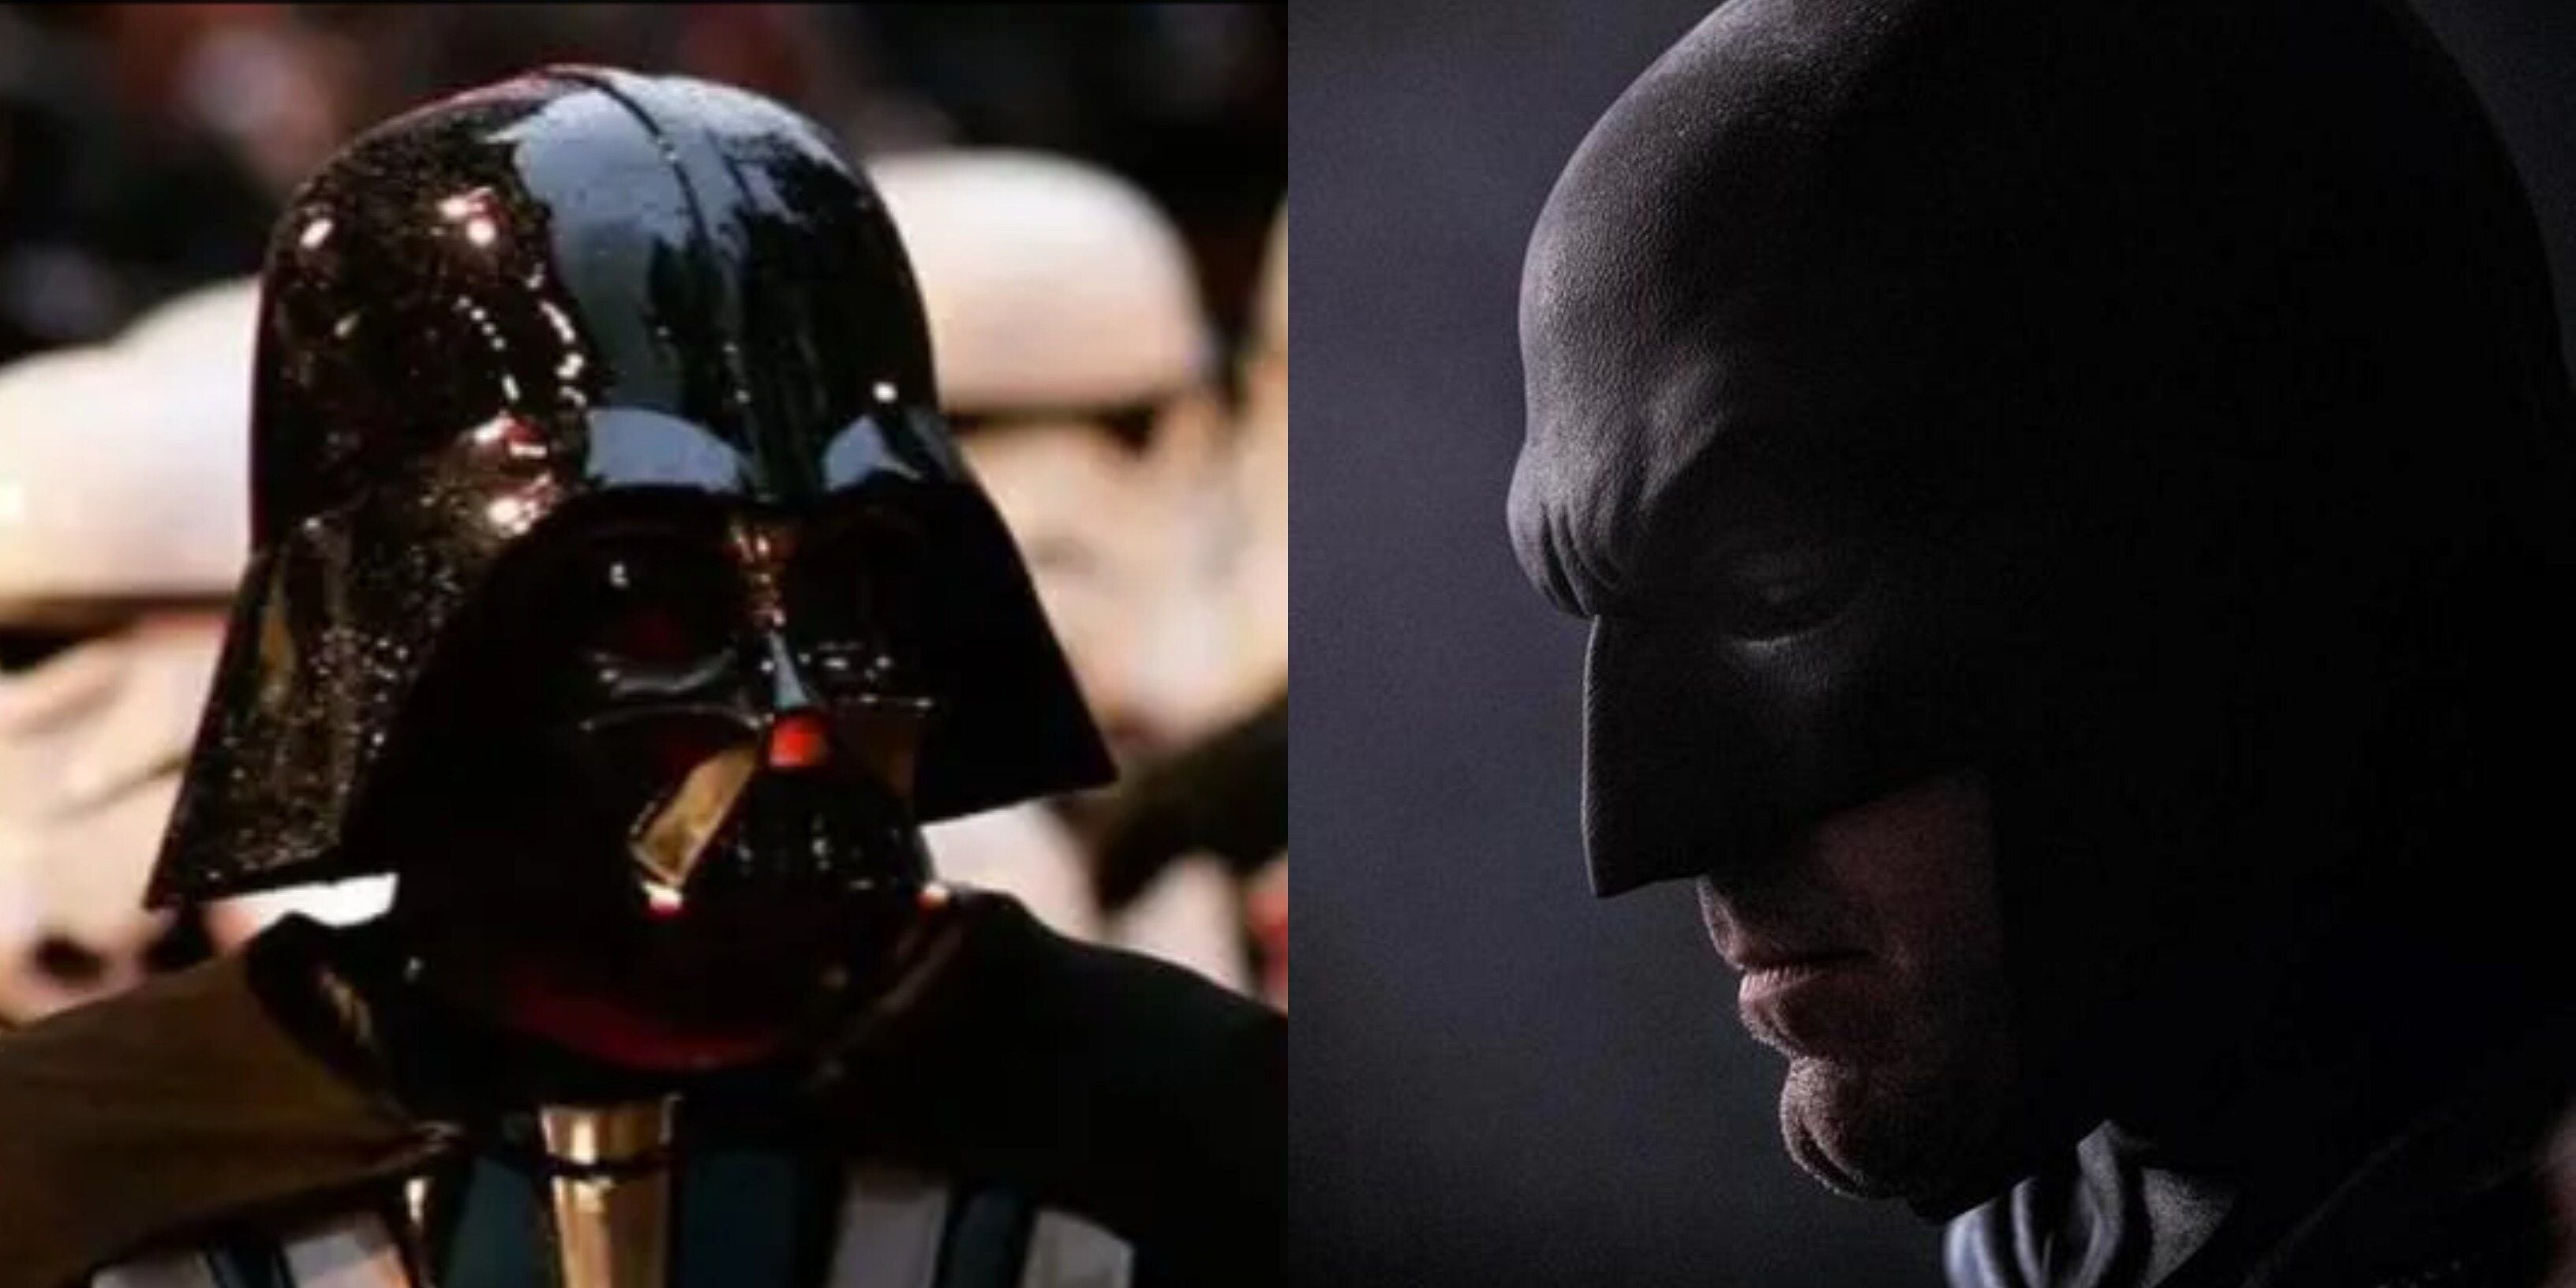 Enquete: Batman ou Darth Vader? - Estadão